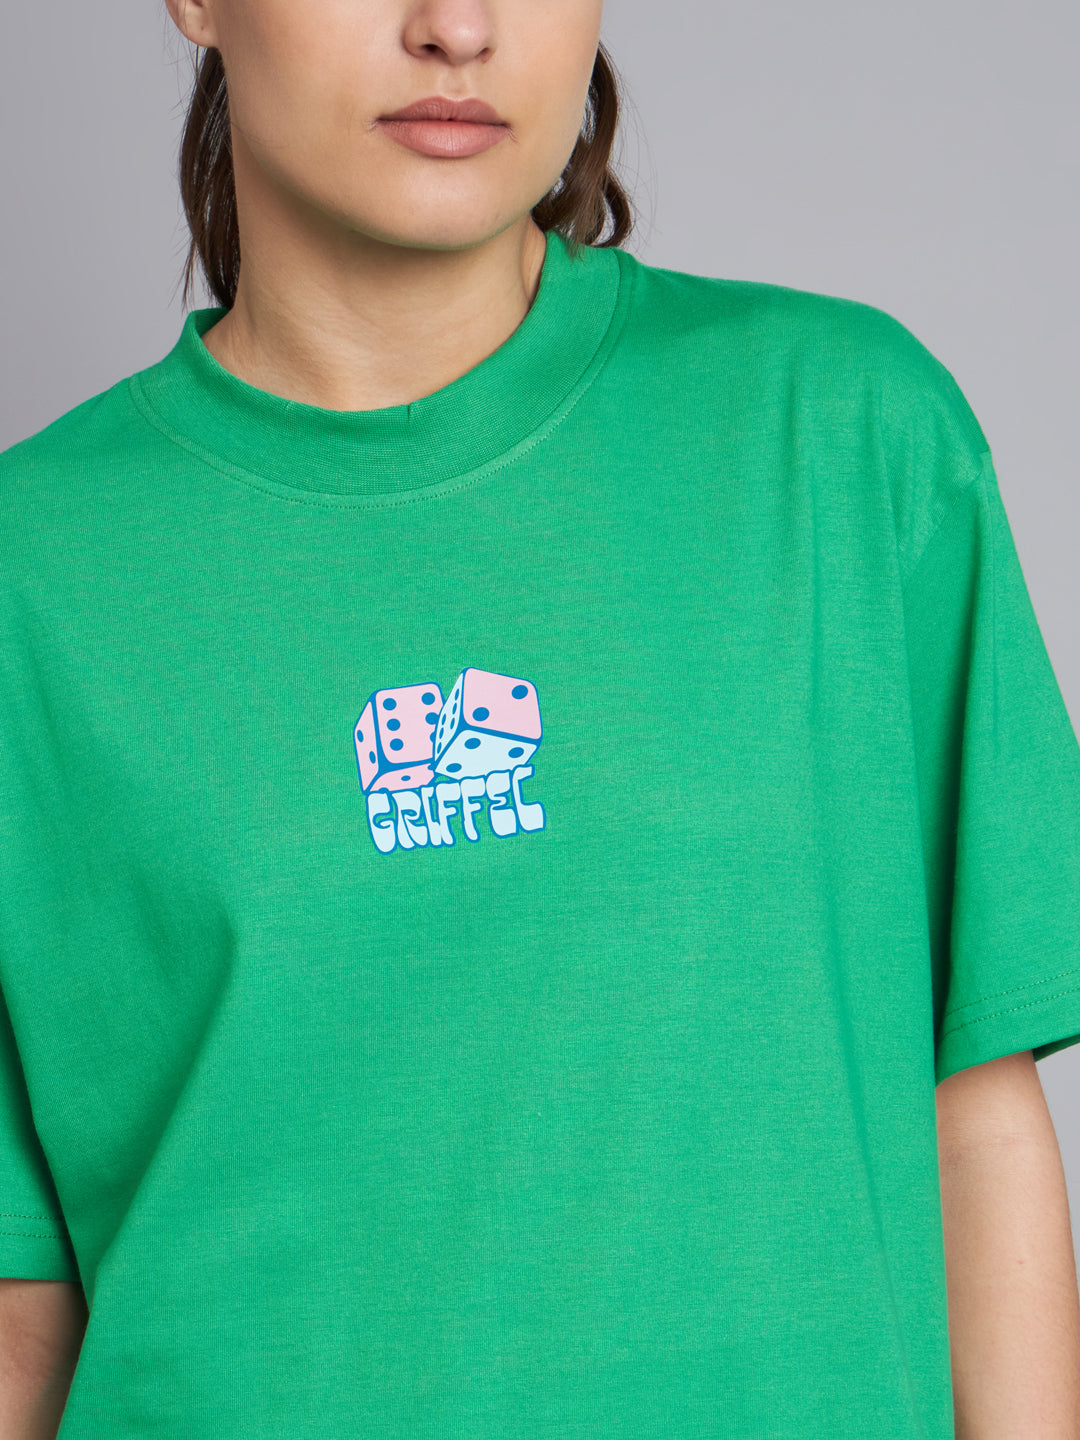 GRIFFEL Women's DICE oversized Drop Shoulder Neon Green T-shirt - griffel